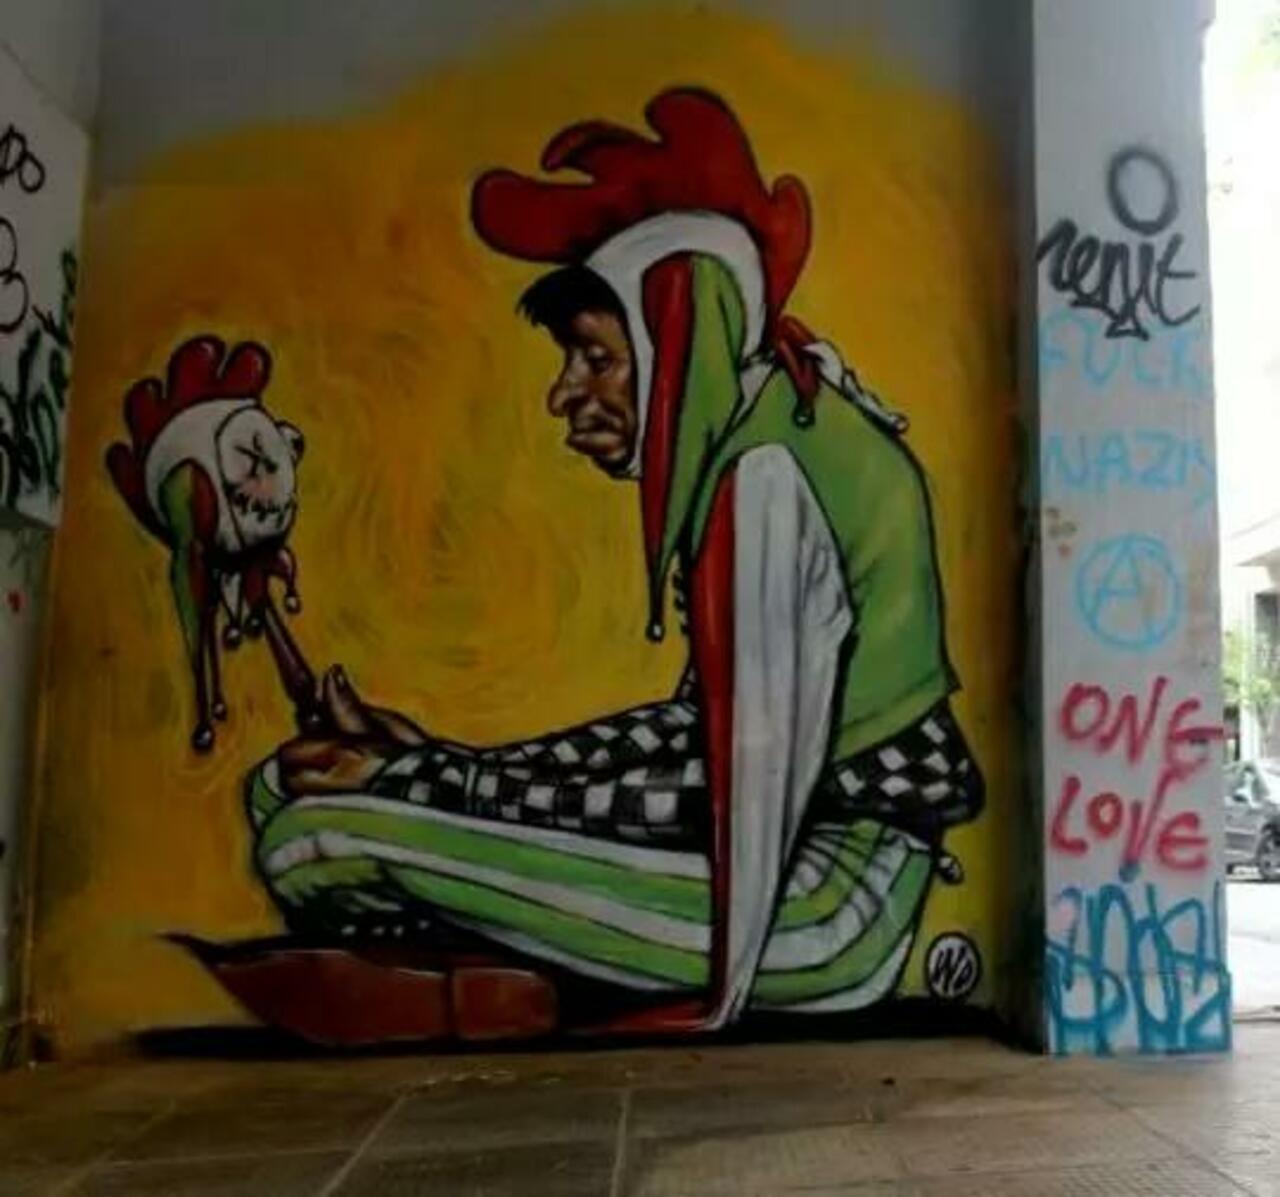 #art #streetart #graffiti 
#WD http://t.co/cvSIyGxGAN